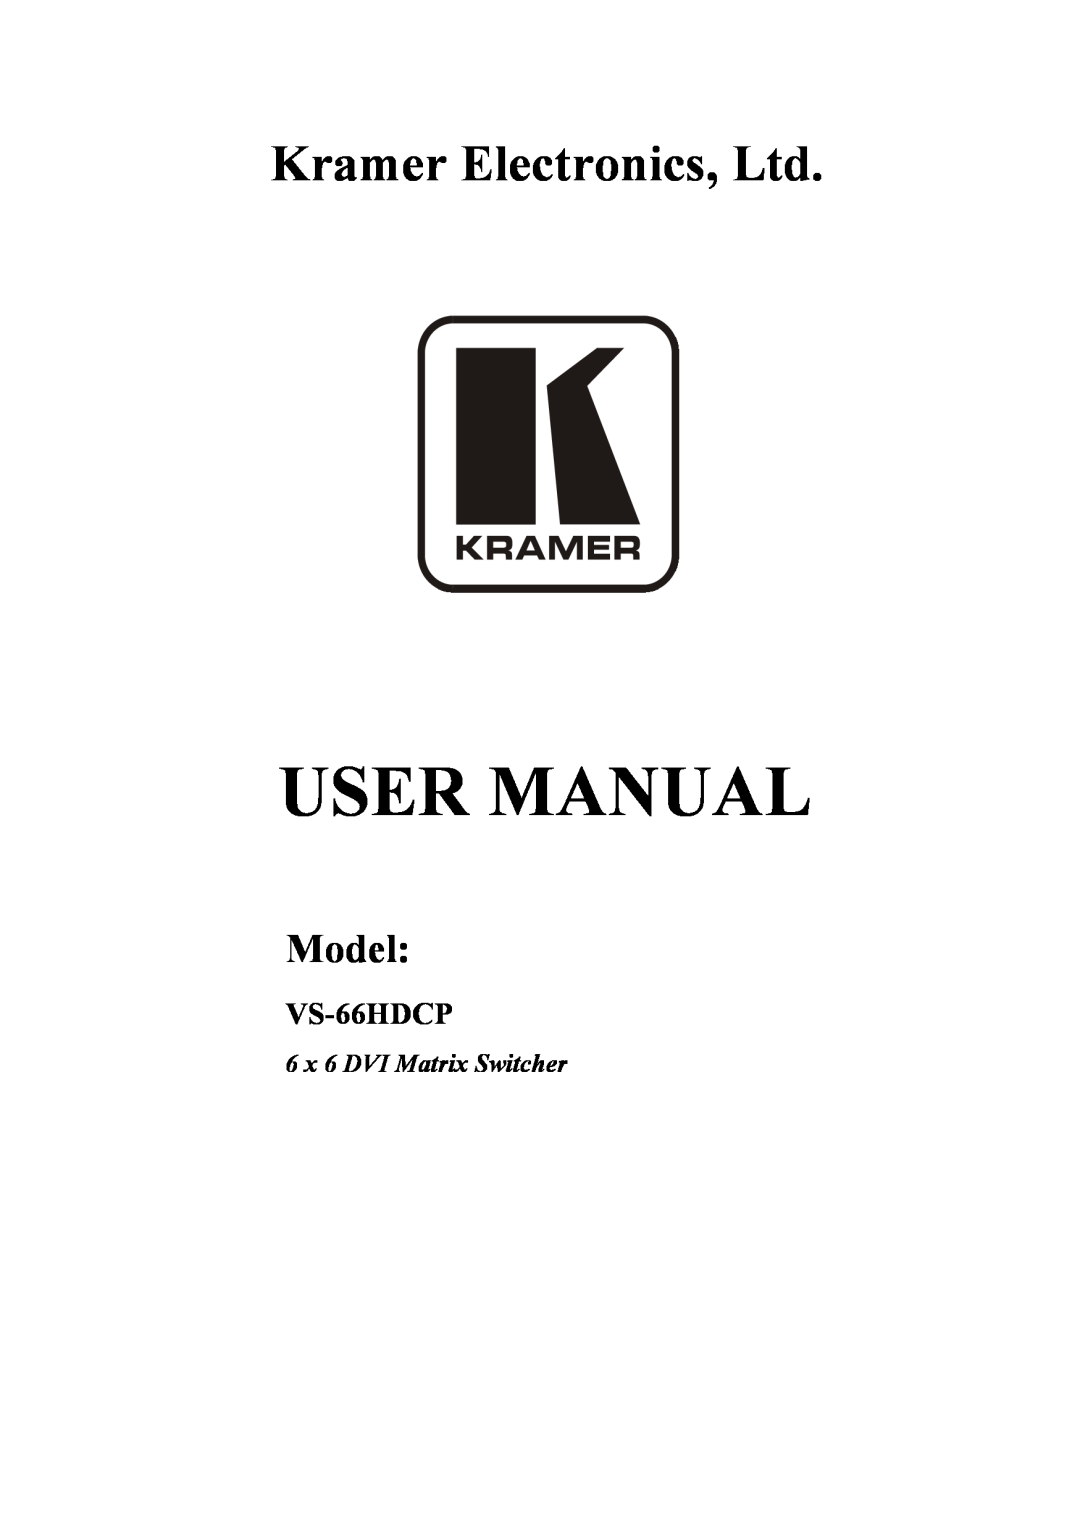 Kramer Electronics VS-66hdcp user manual User Manual, Model, VS-66HDCP, 6 x 6 DVI Matrix Switcher 